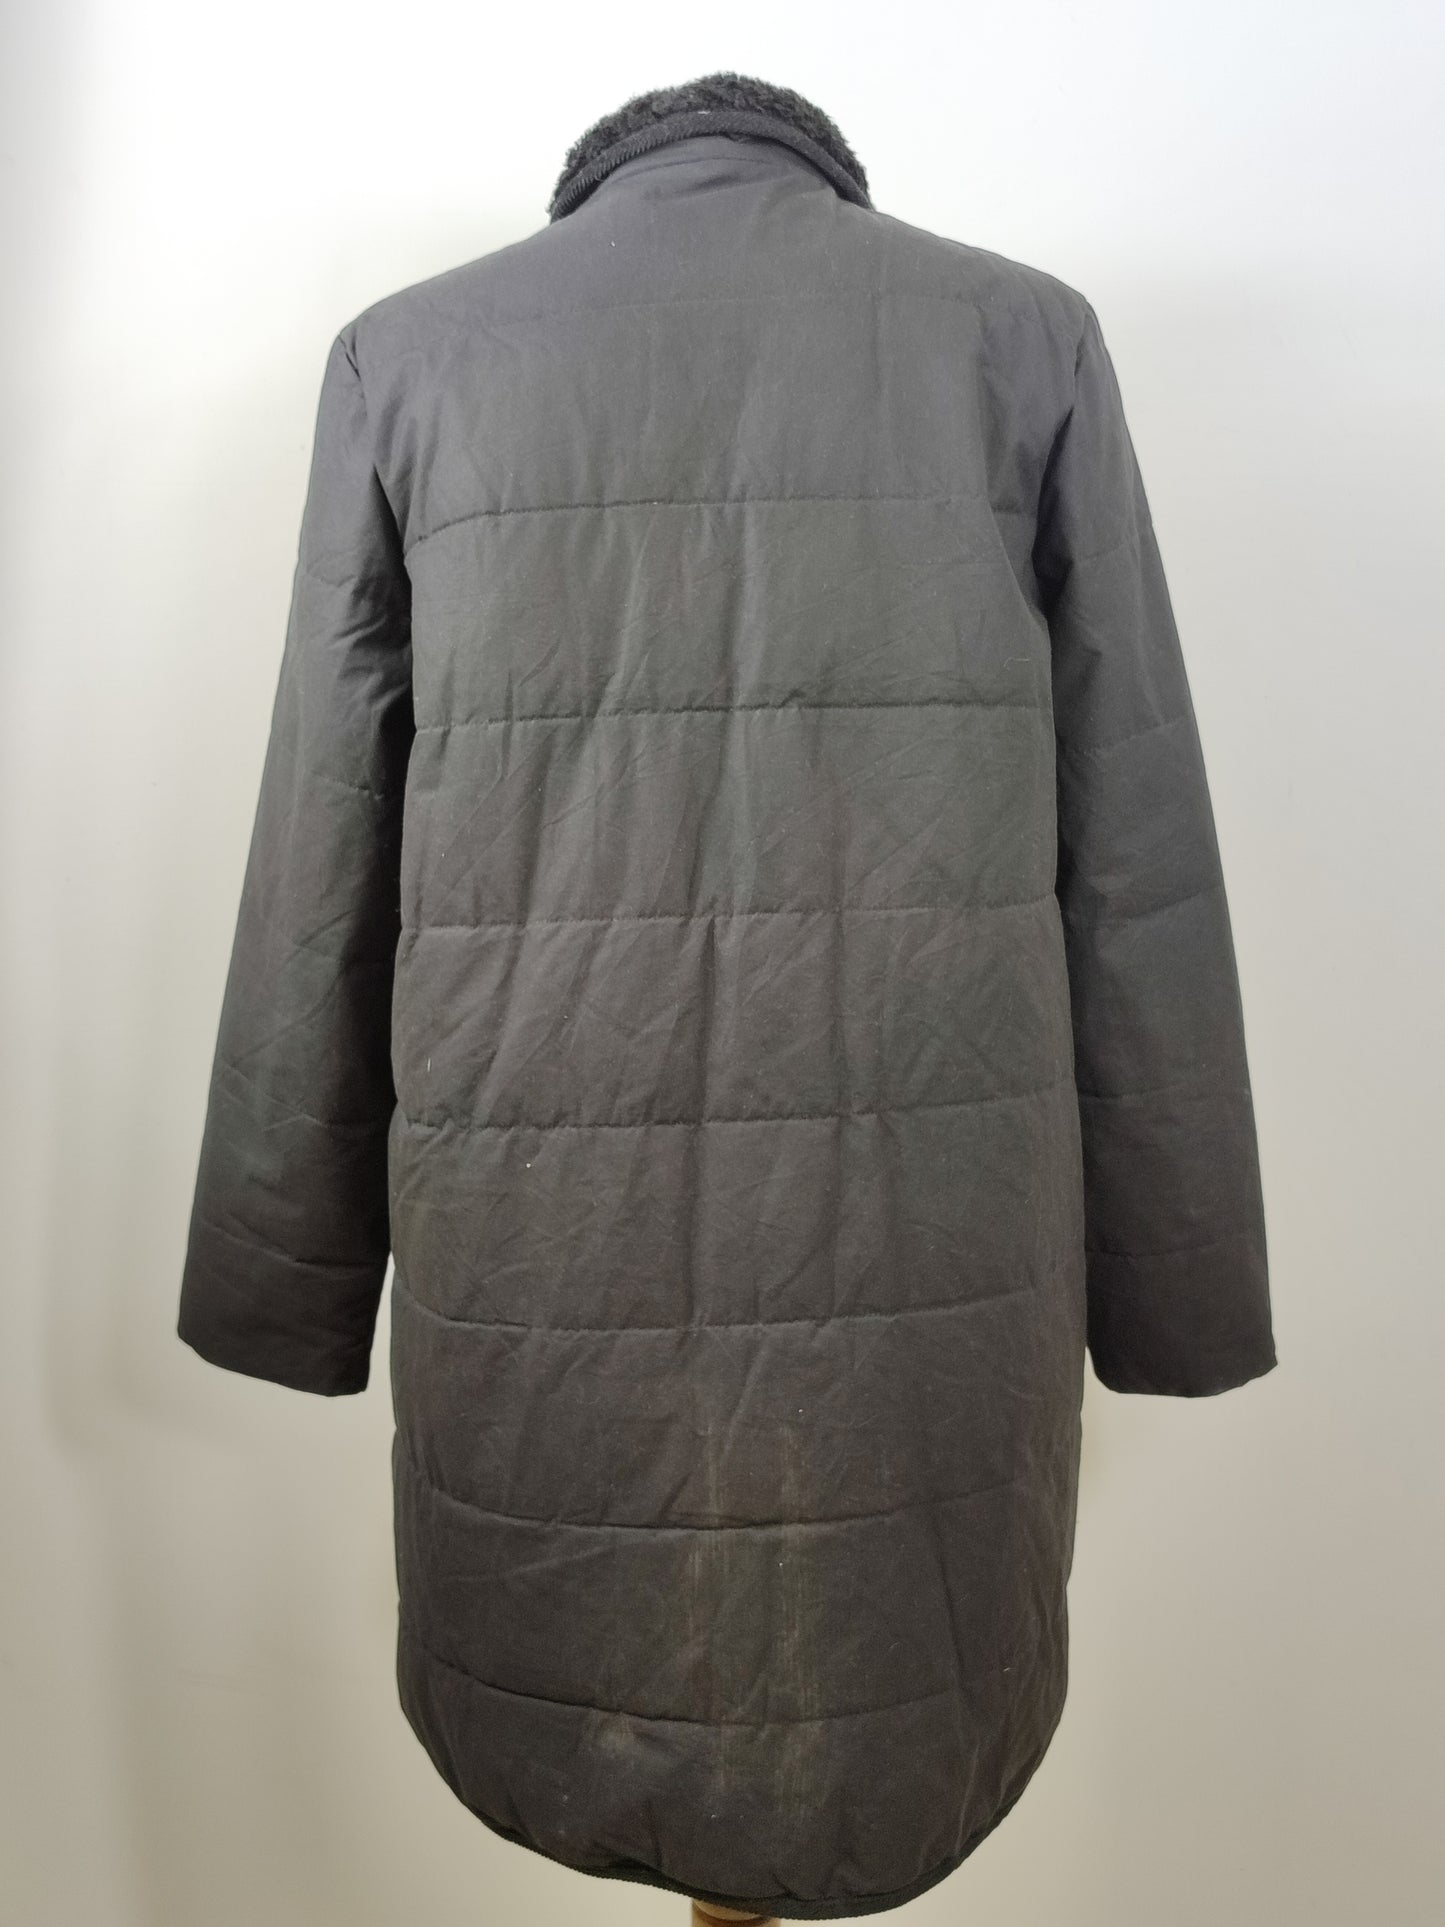 Giacca Barbour Nera imbottita da donna UK10 small - Lady winter Black wax coat size UK10